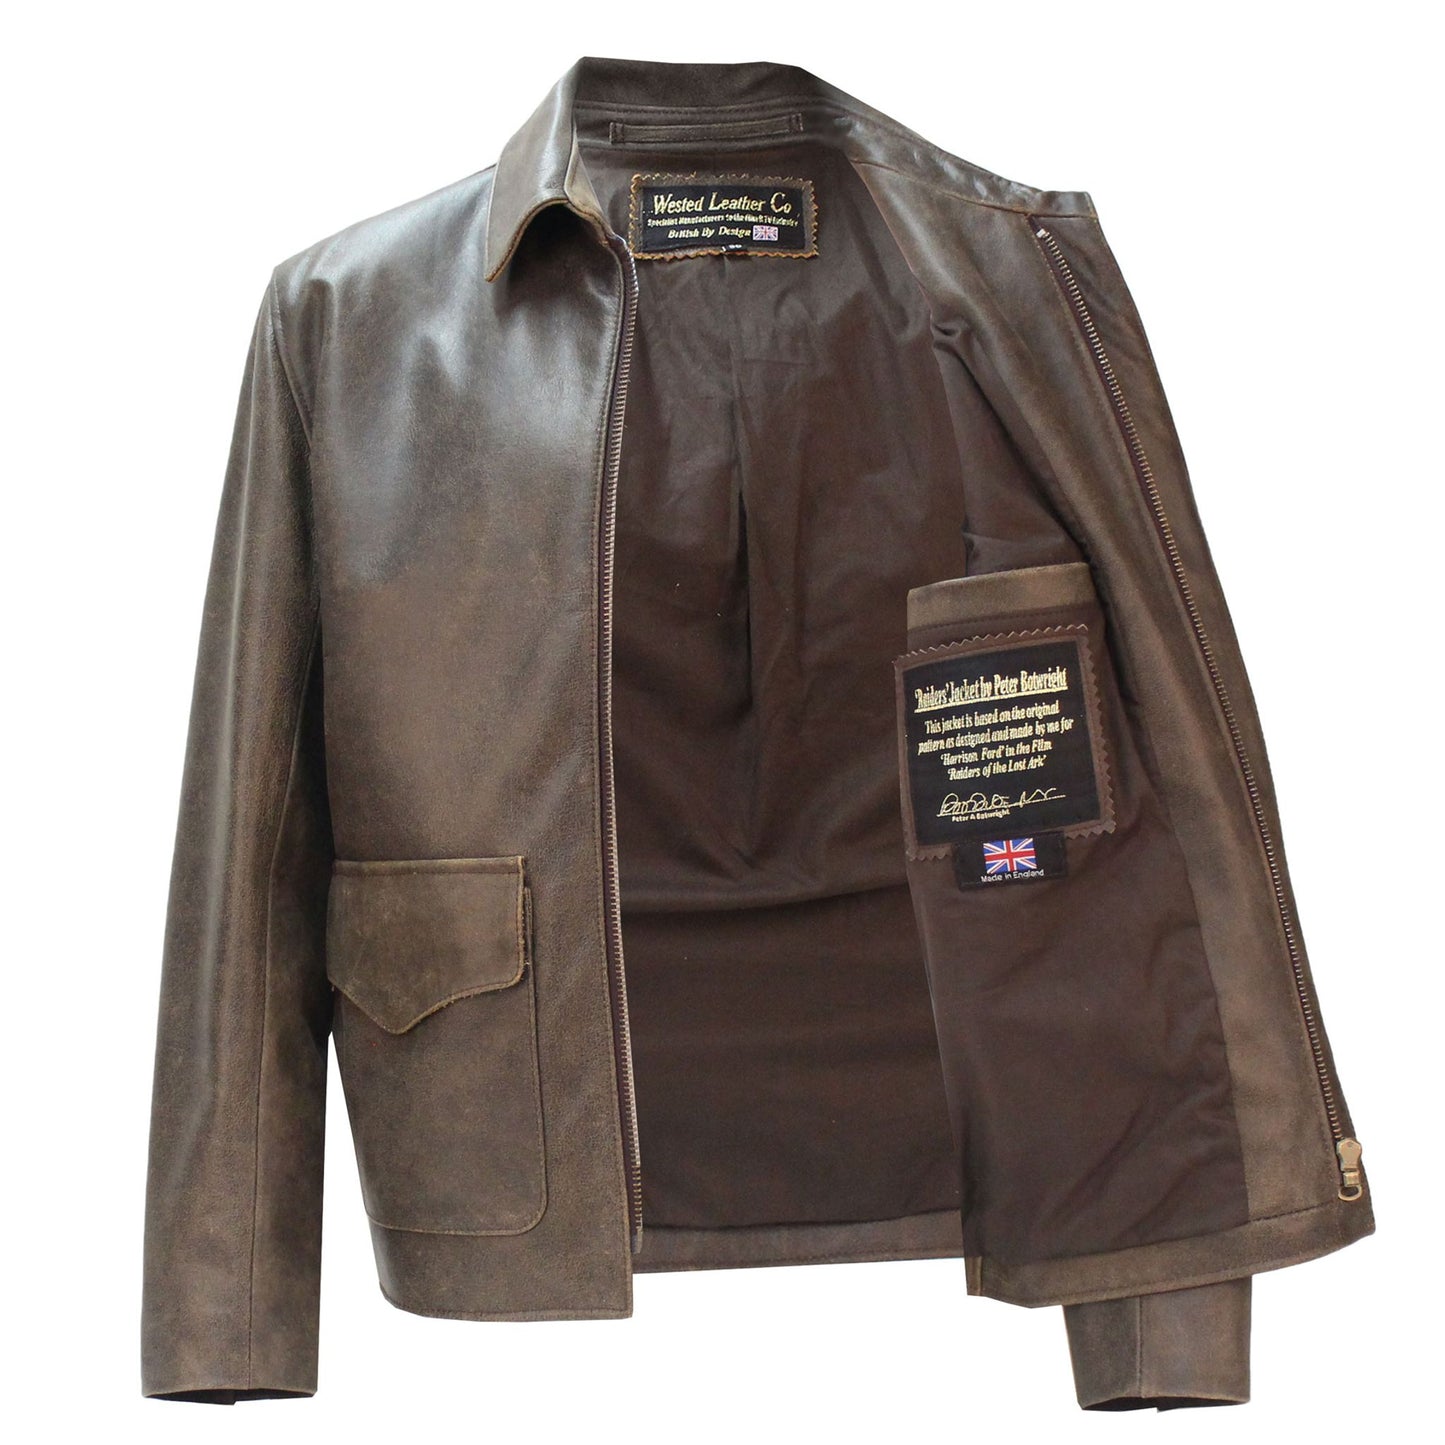 Raiders of Lost Ark Leather Jacket in Pre-distressed Hide